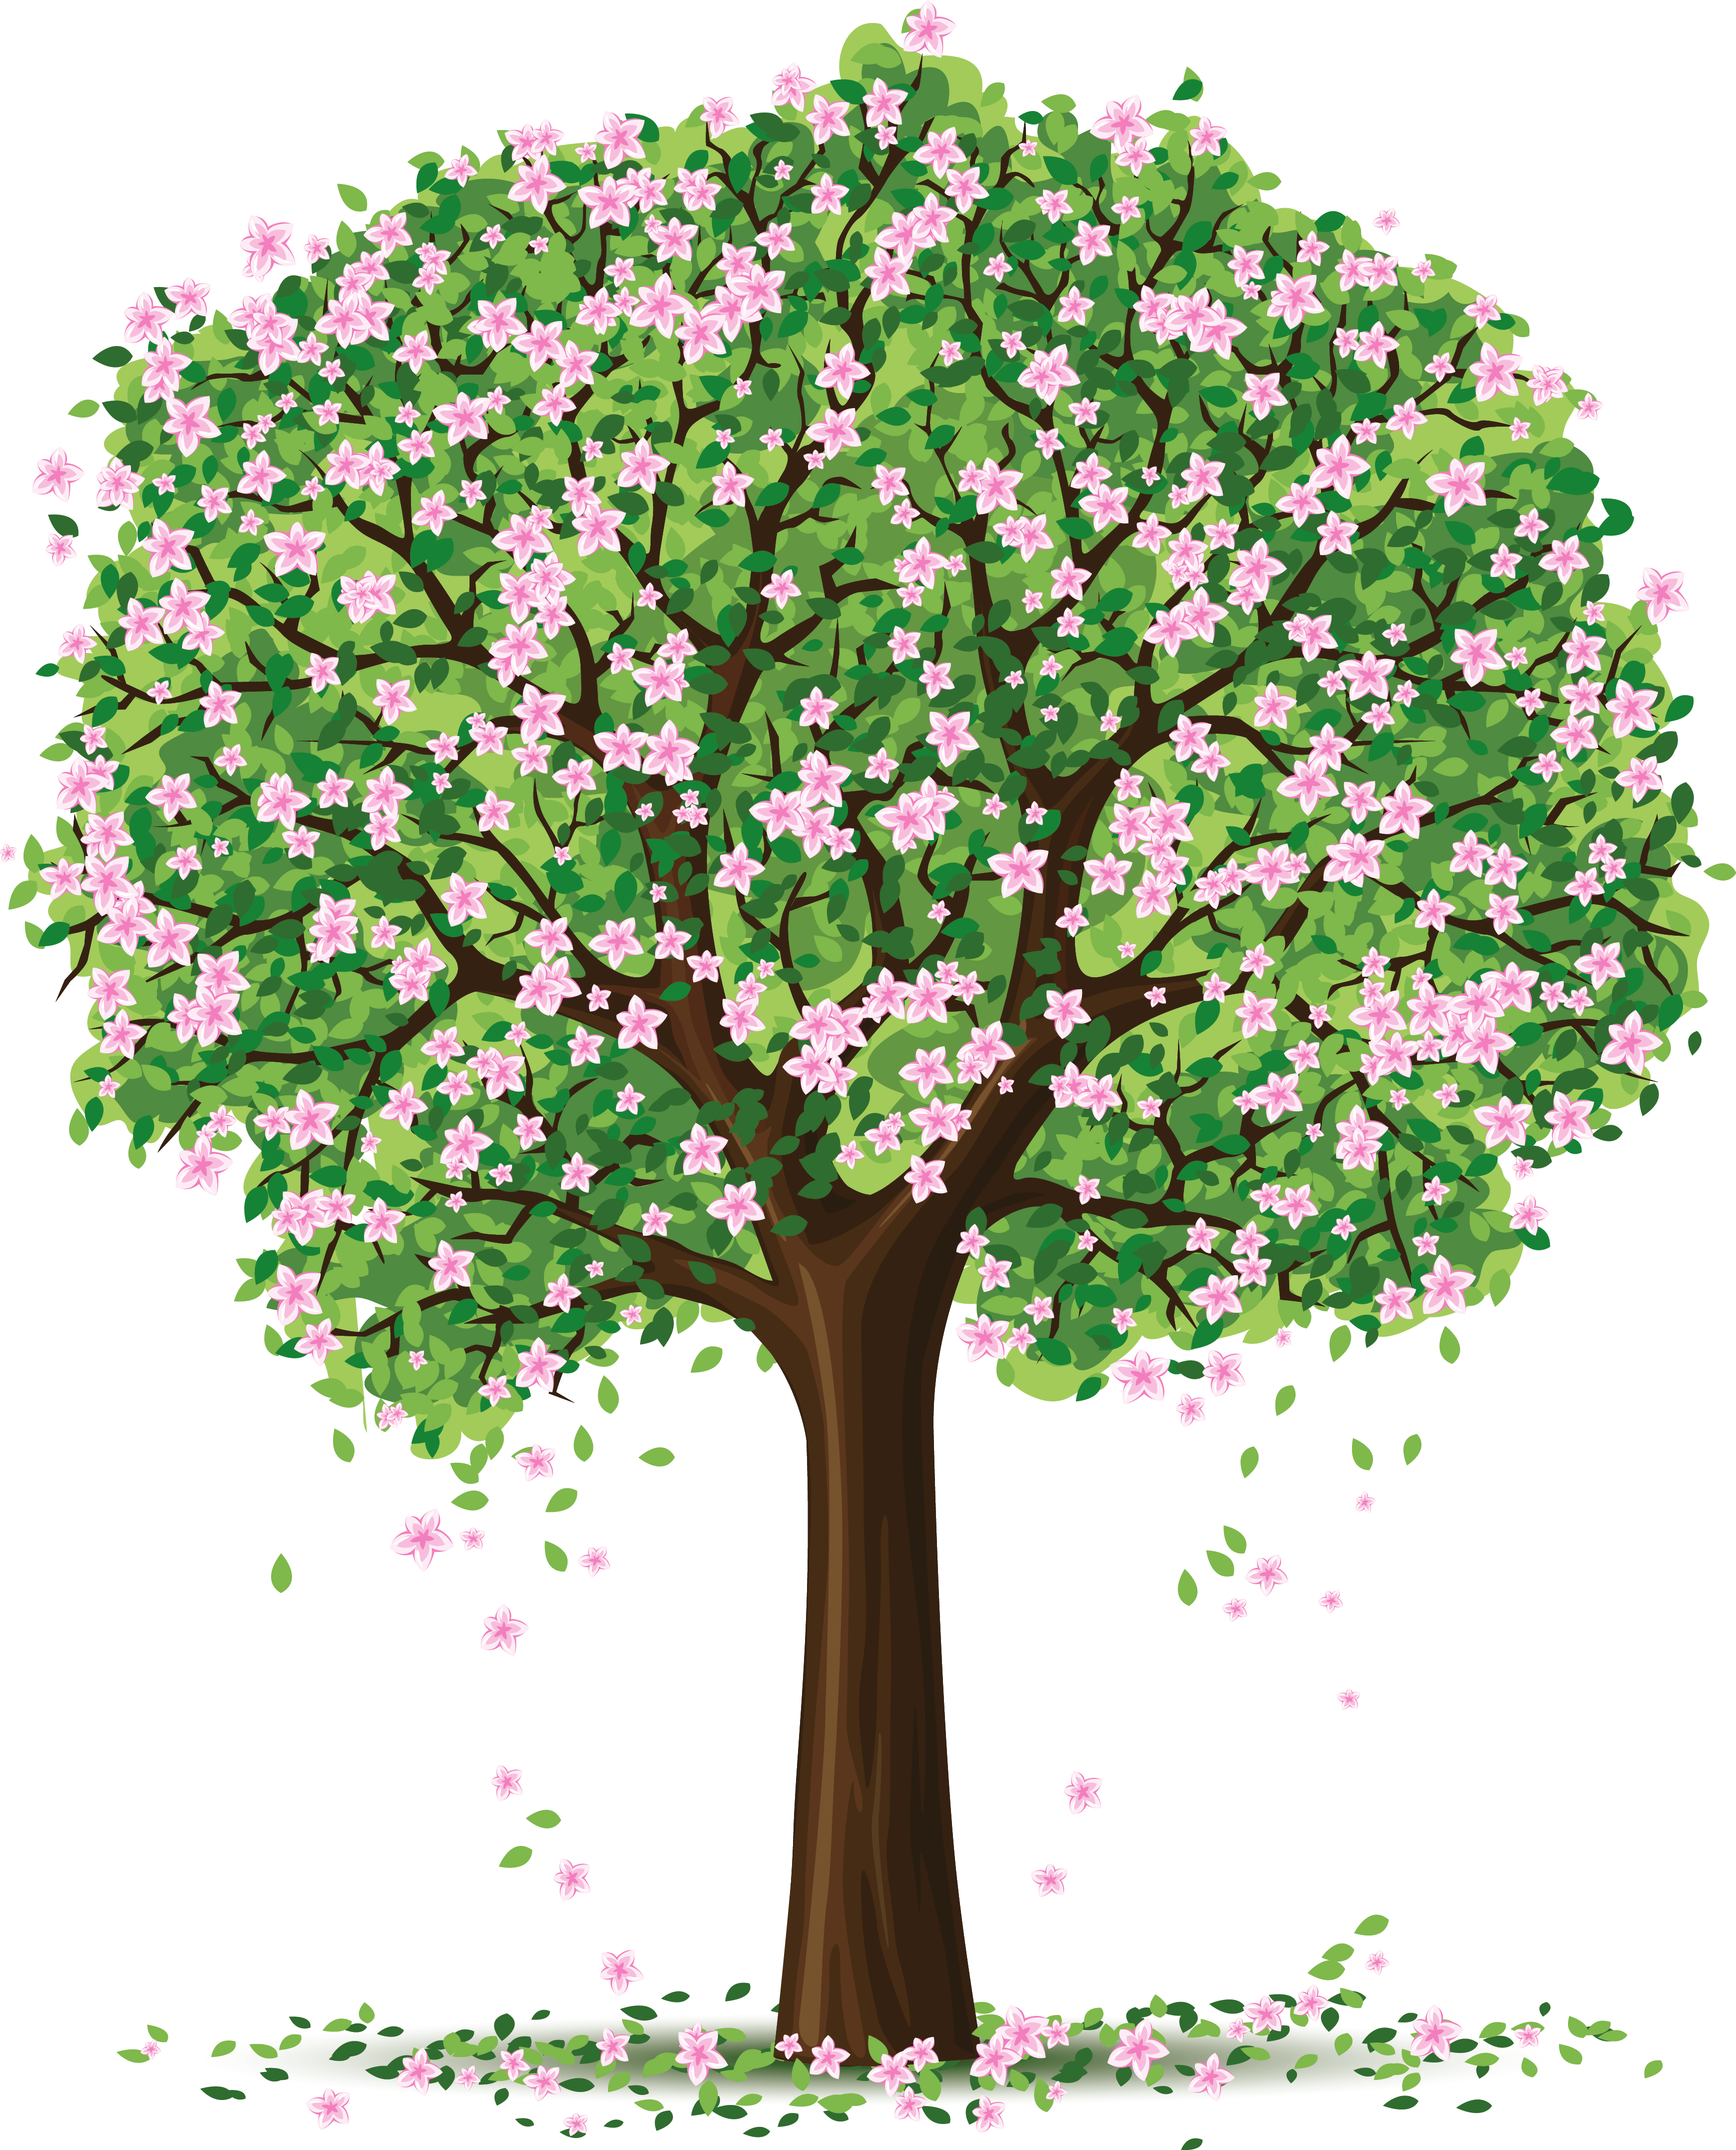 Spring - Cartoon Tree With Flowers (3472x4299)